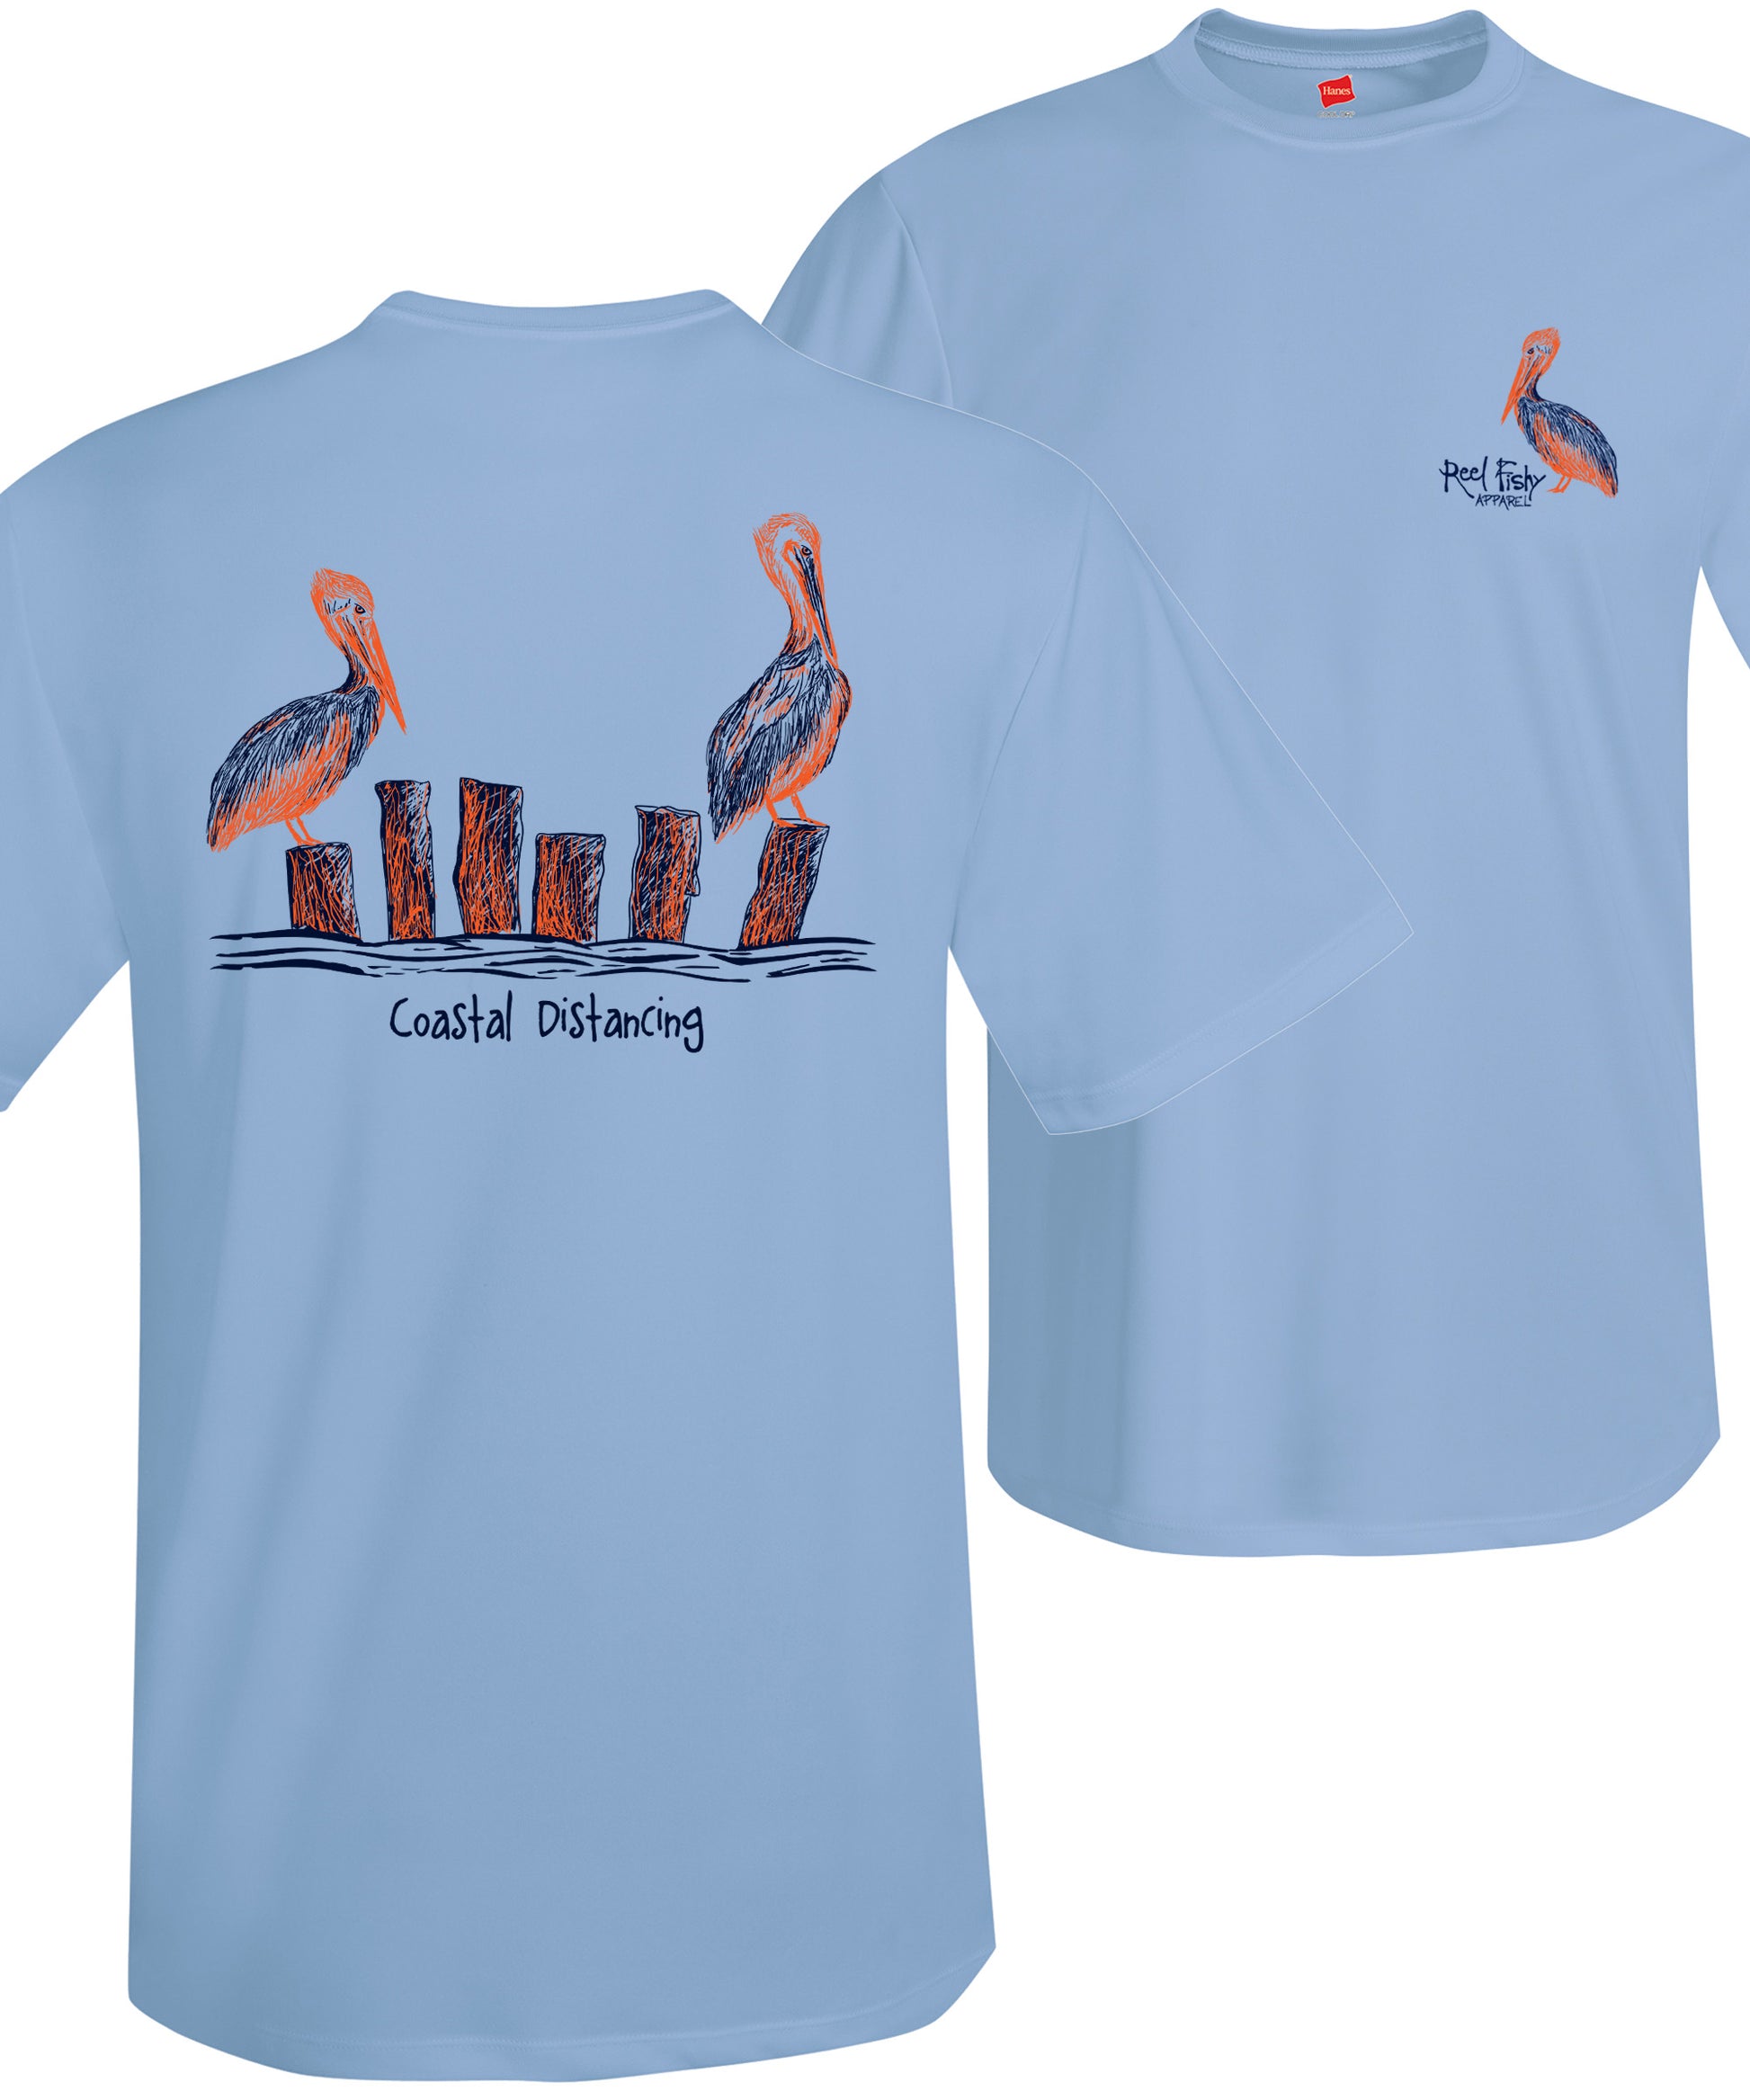 Pelicans Coastal Distancing Performance Dry-fit Lt. Blue Short Sleeve Shirts